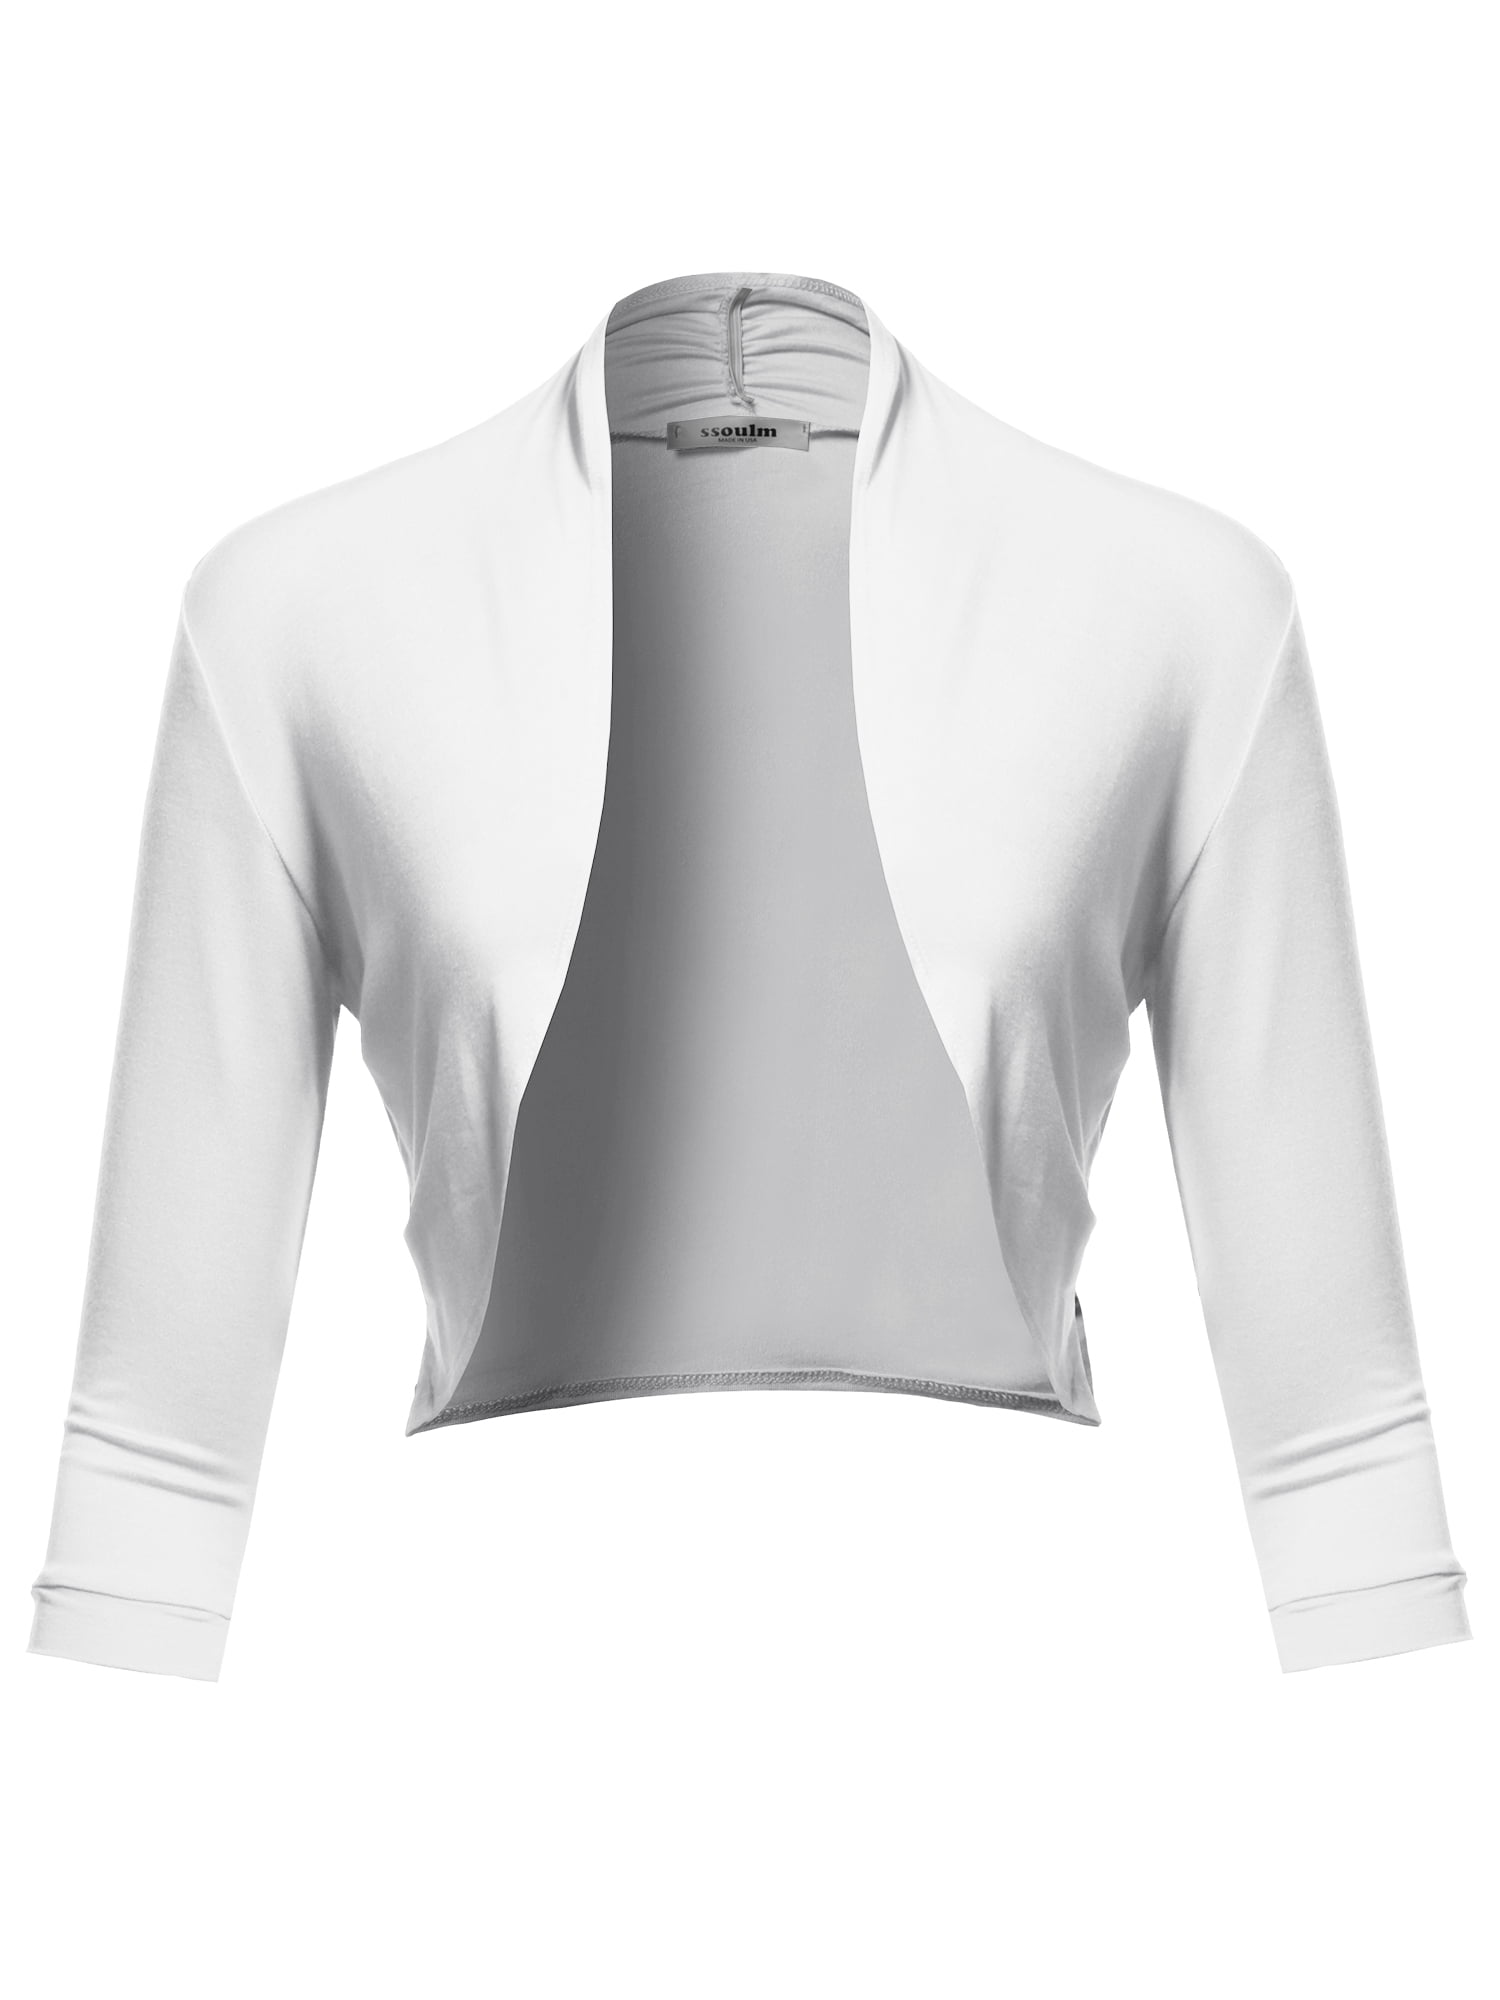 SSOULM Women's 3/4 Sleeve Open Front Bolero Shrug Cardigan with Plus Size 